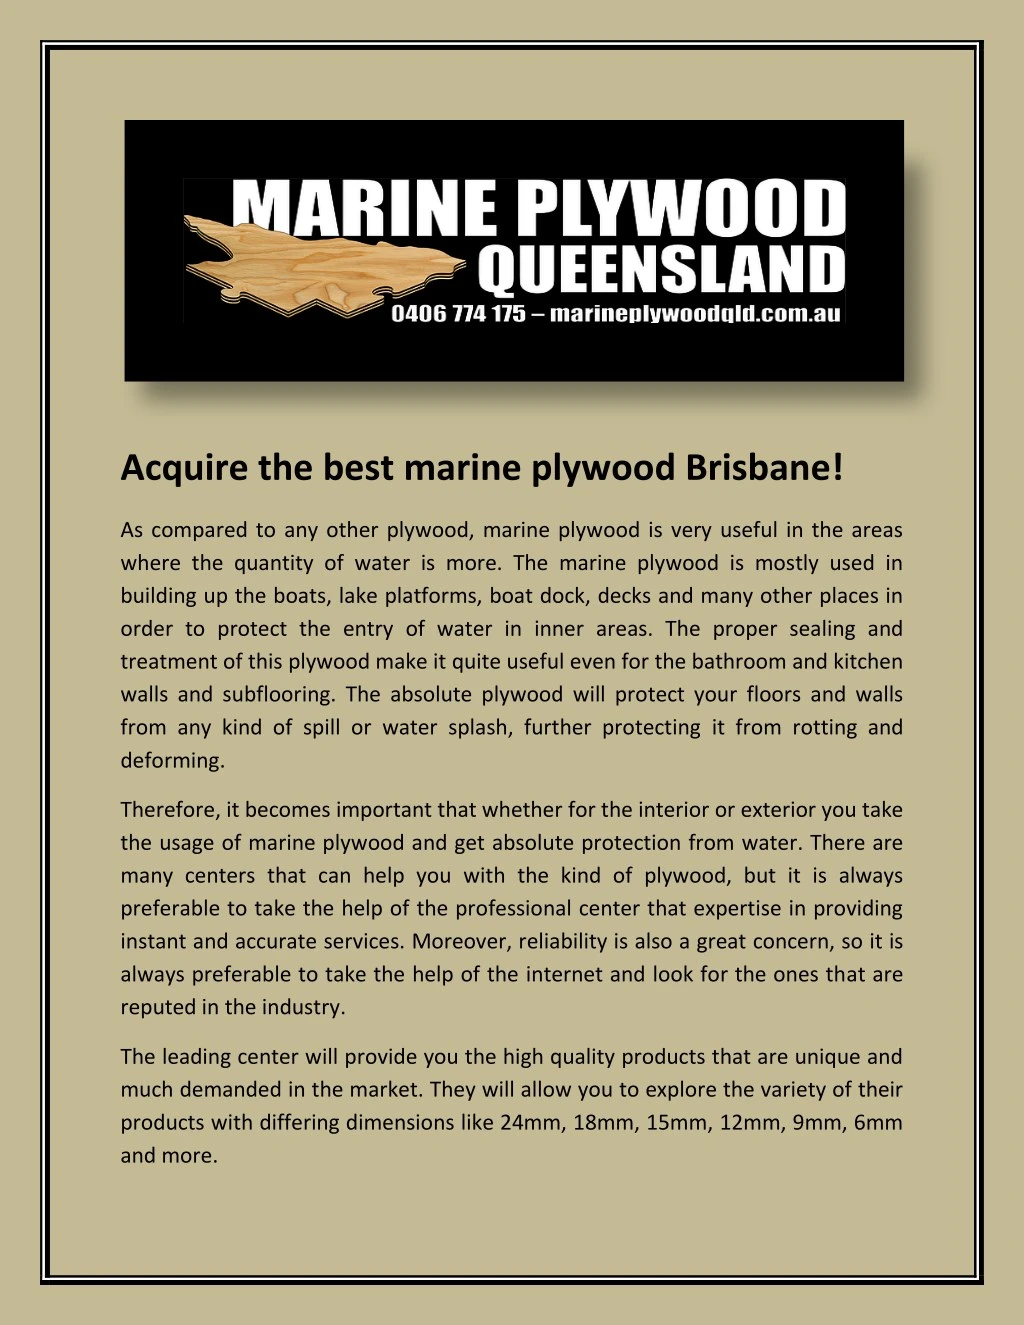 acquire the best marine plywood brisbane